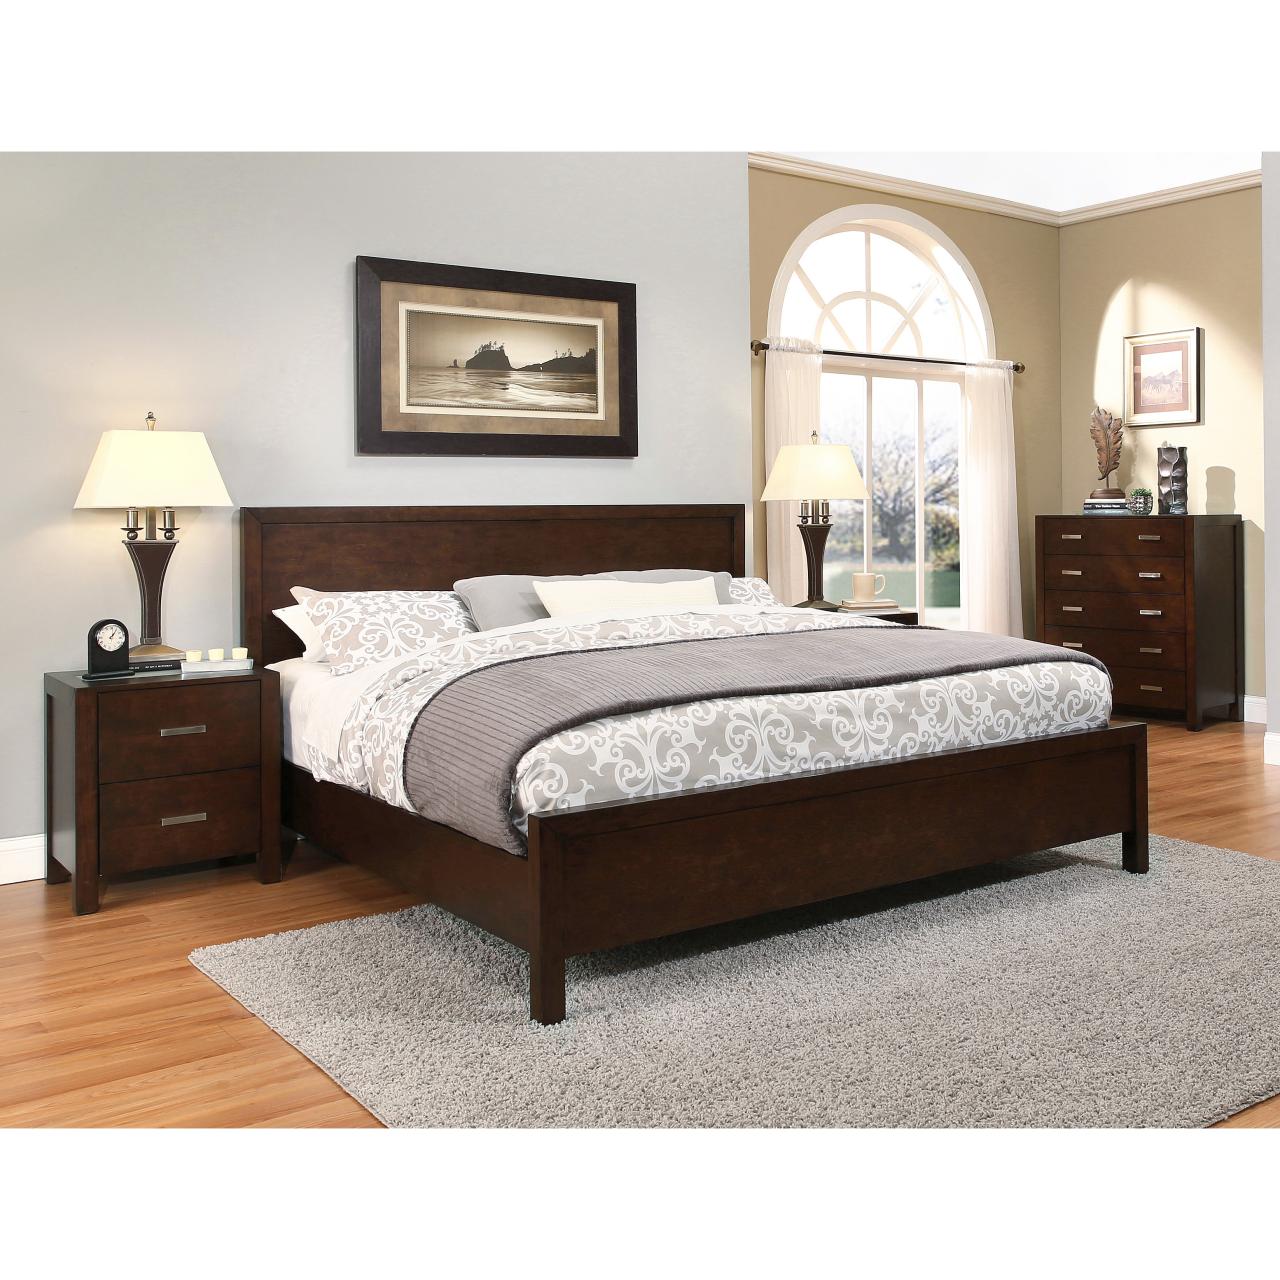 Furniture bed set america dark walnut grande piece bedroom sets nightstand overstock king big shopping